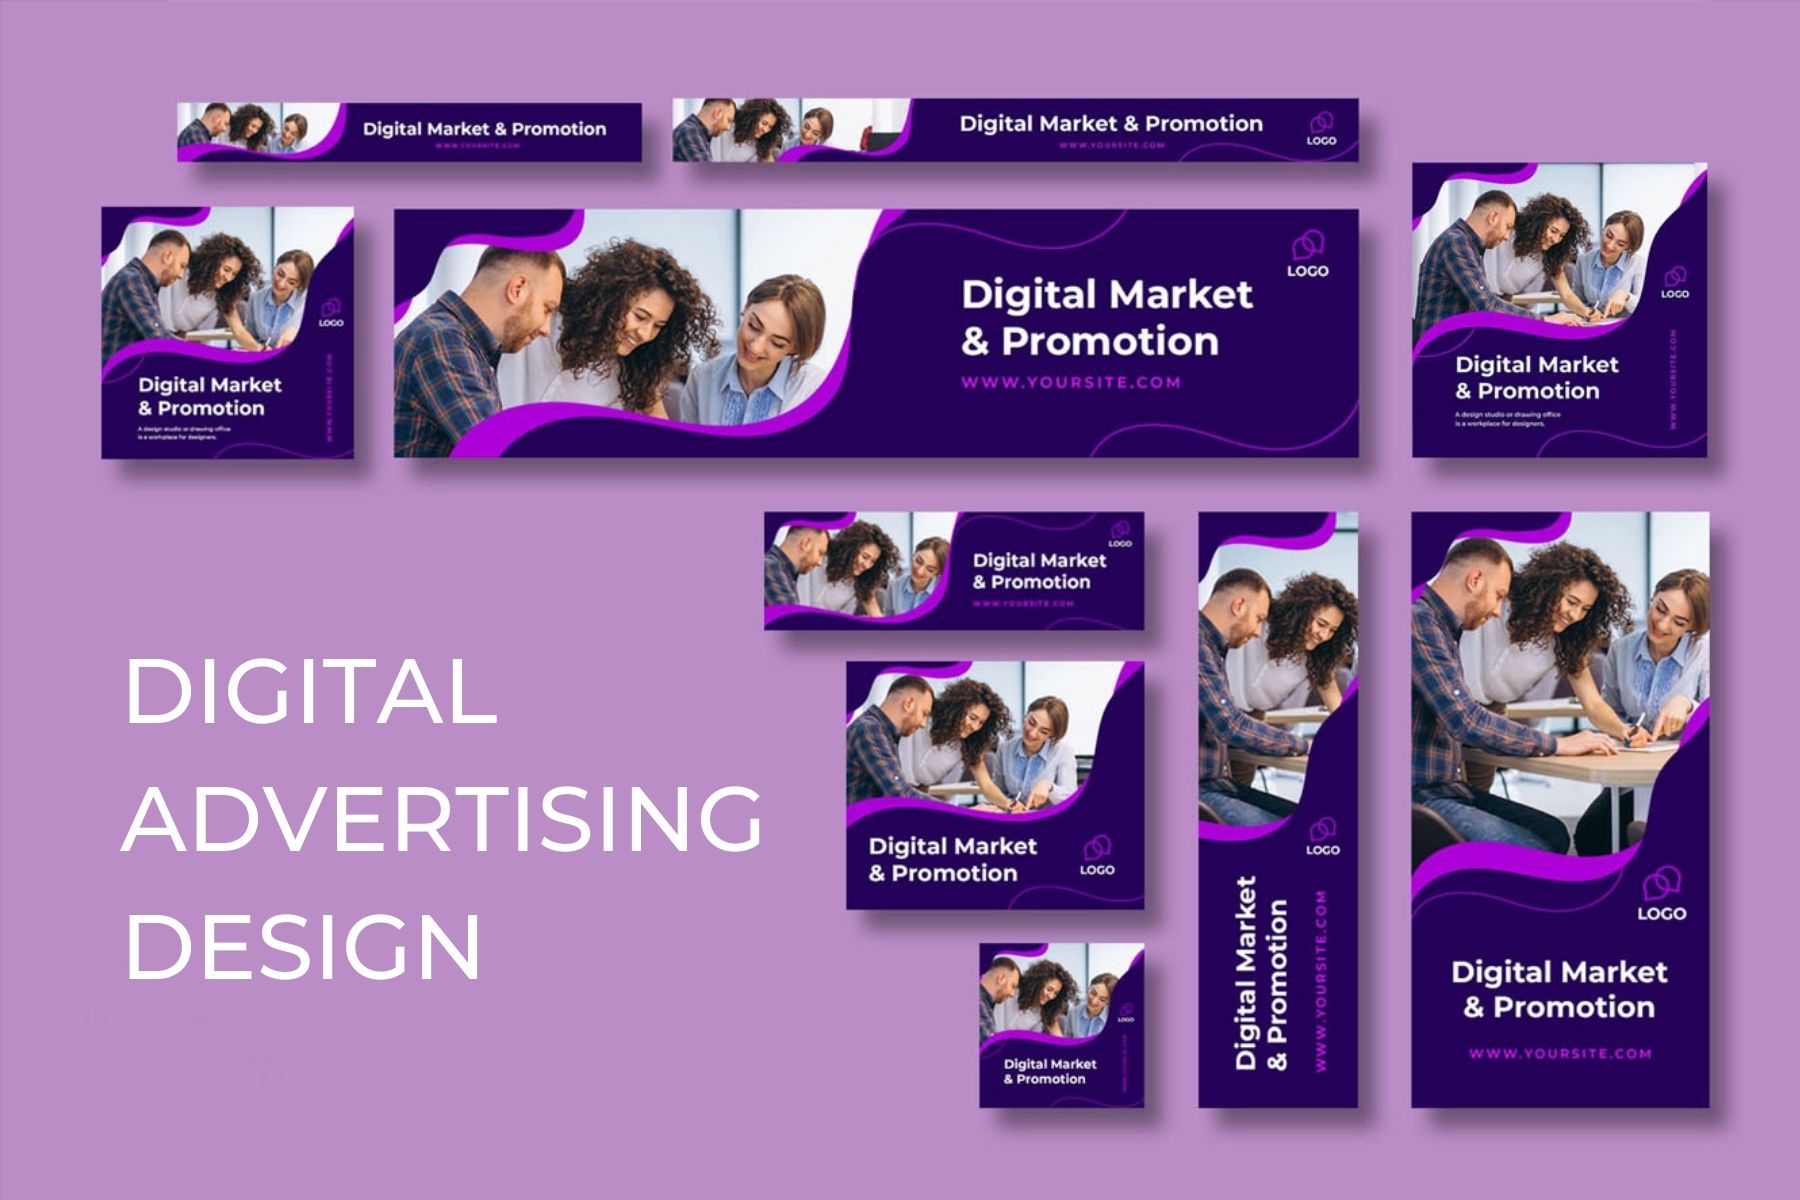 Digital Advertising Design for an Online Business